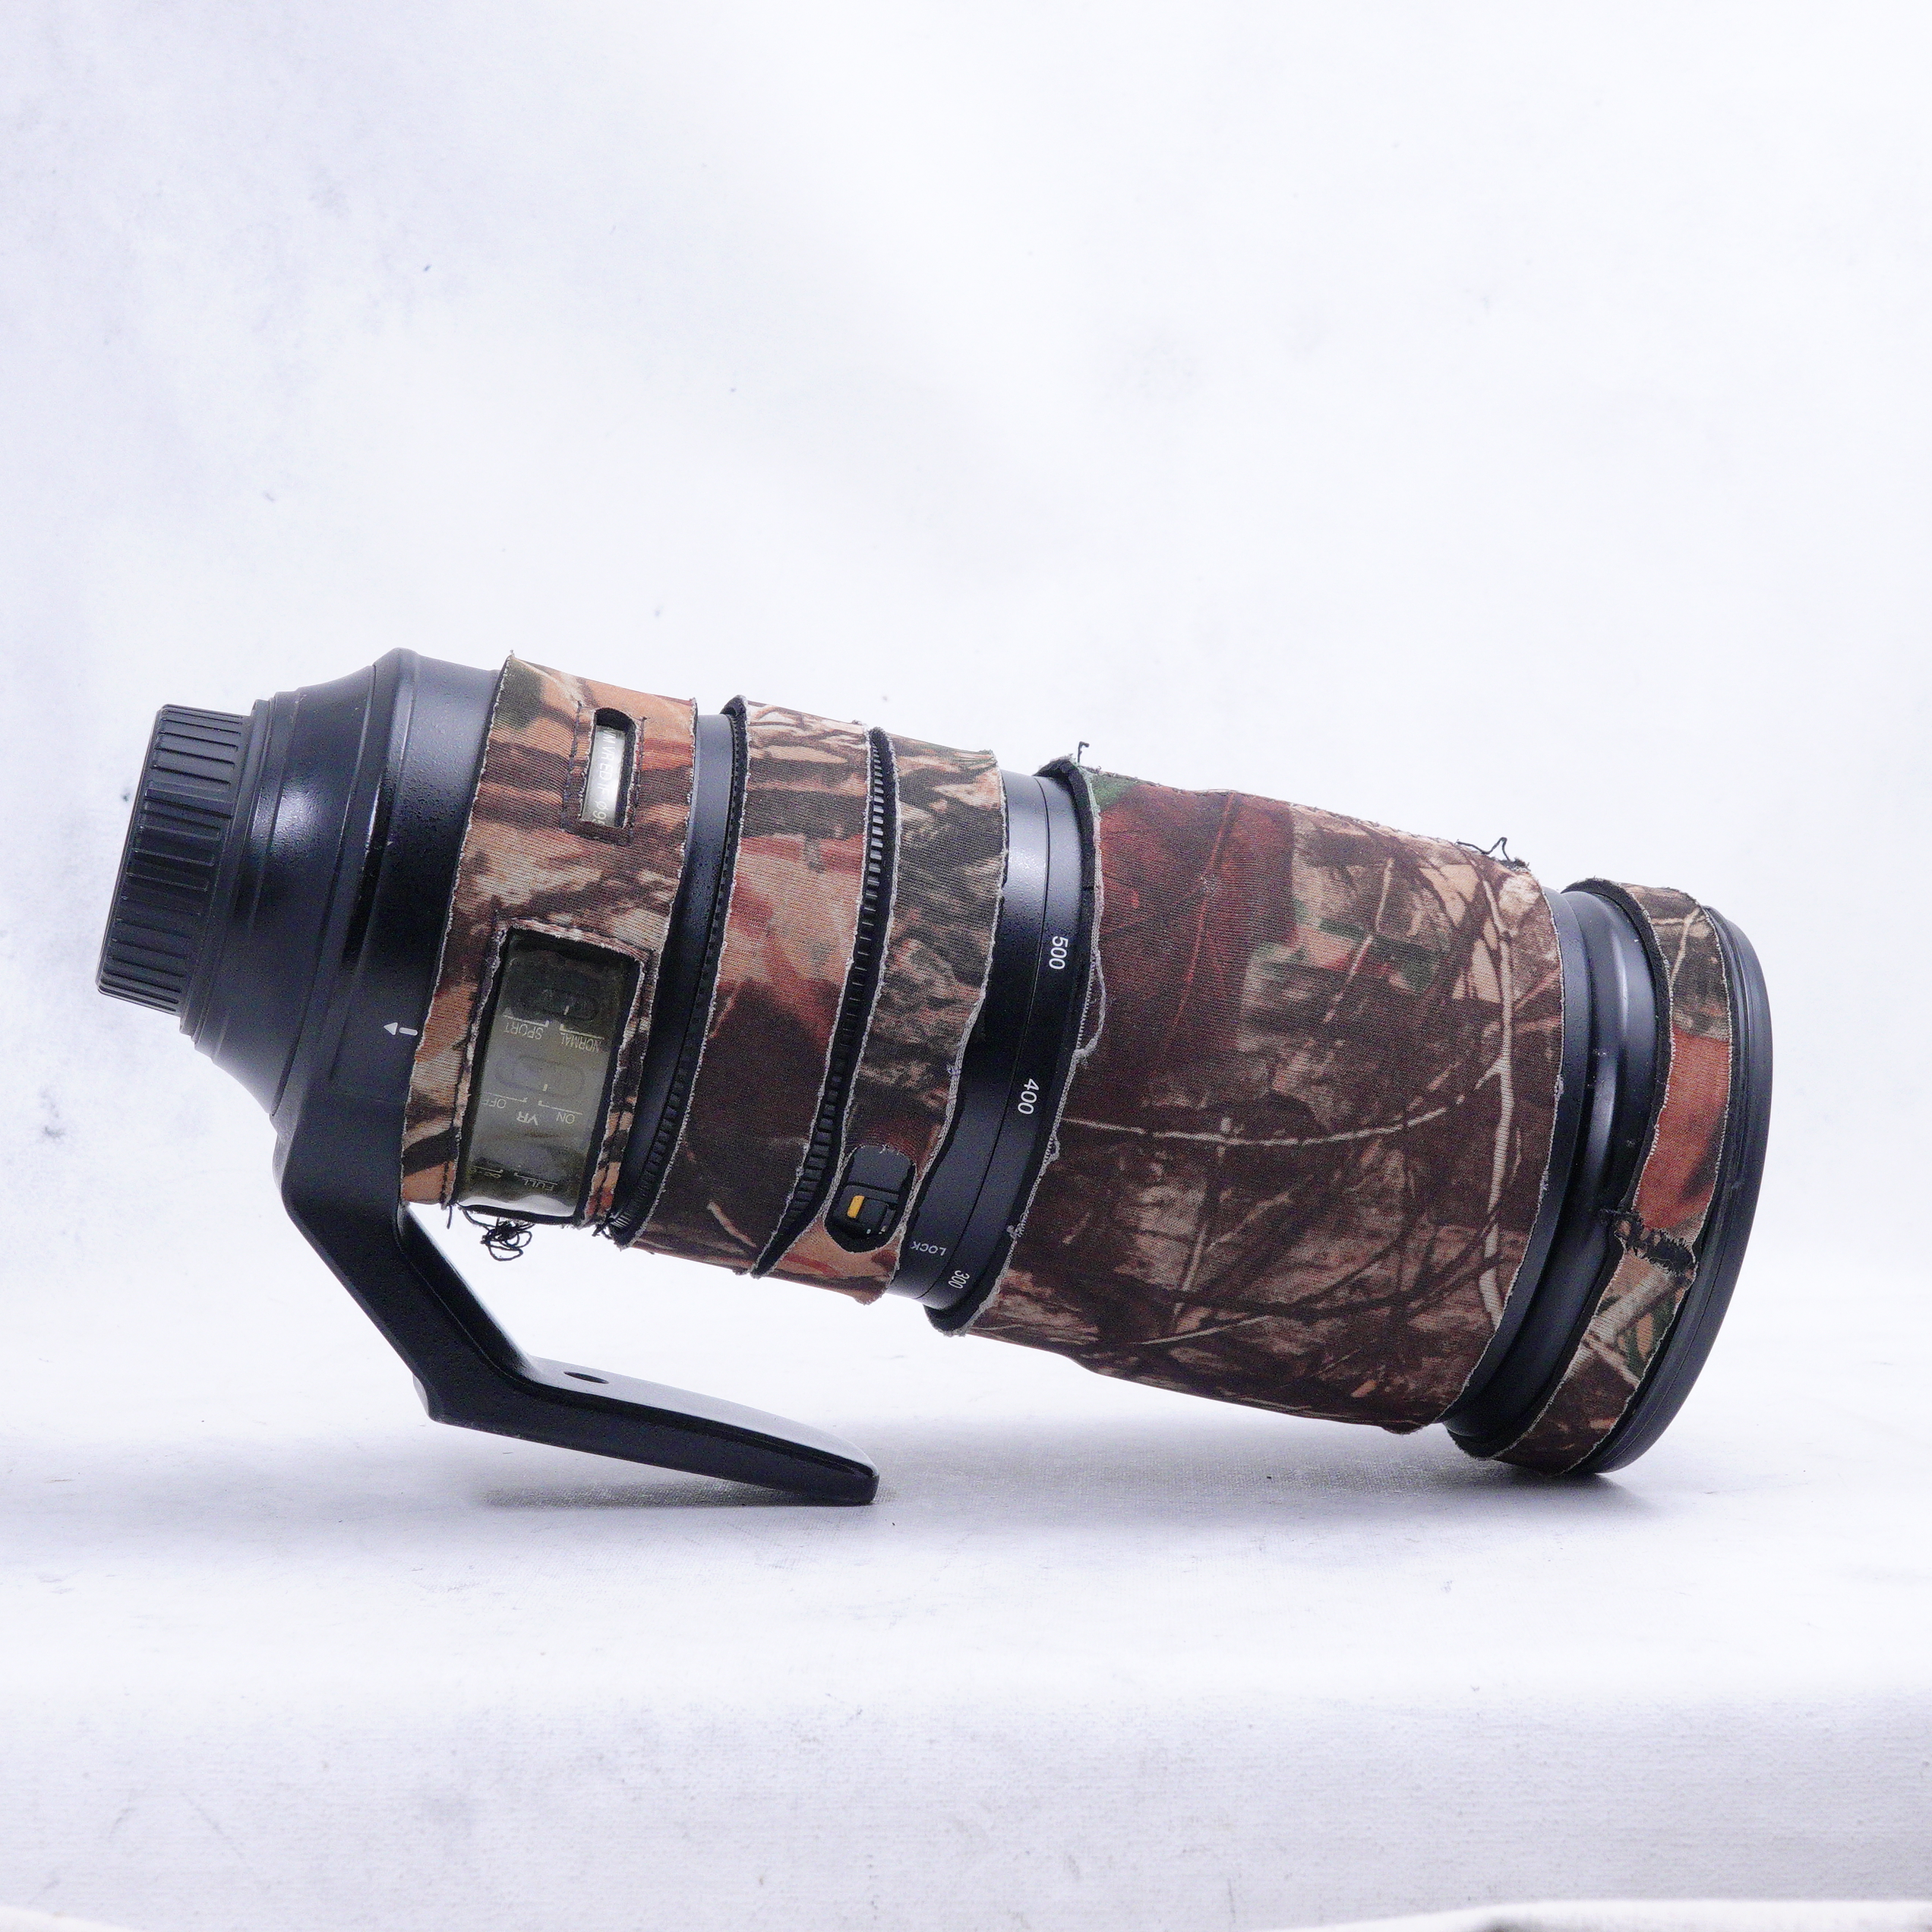 Nikon AF-S NIKKOR 200-500mm f/5.6E ED VR con skin - Usado